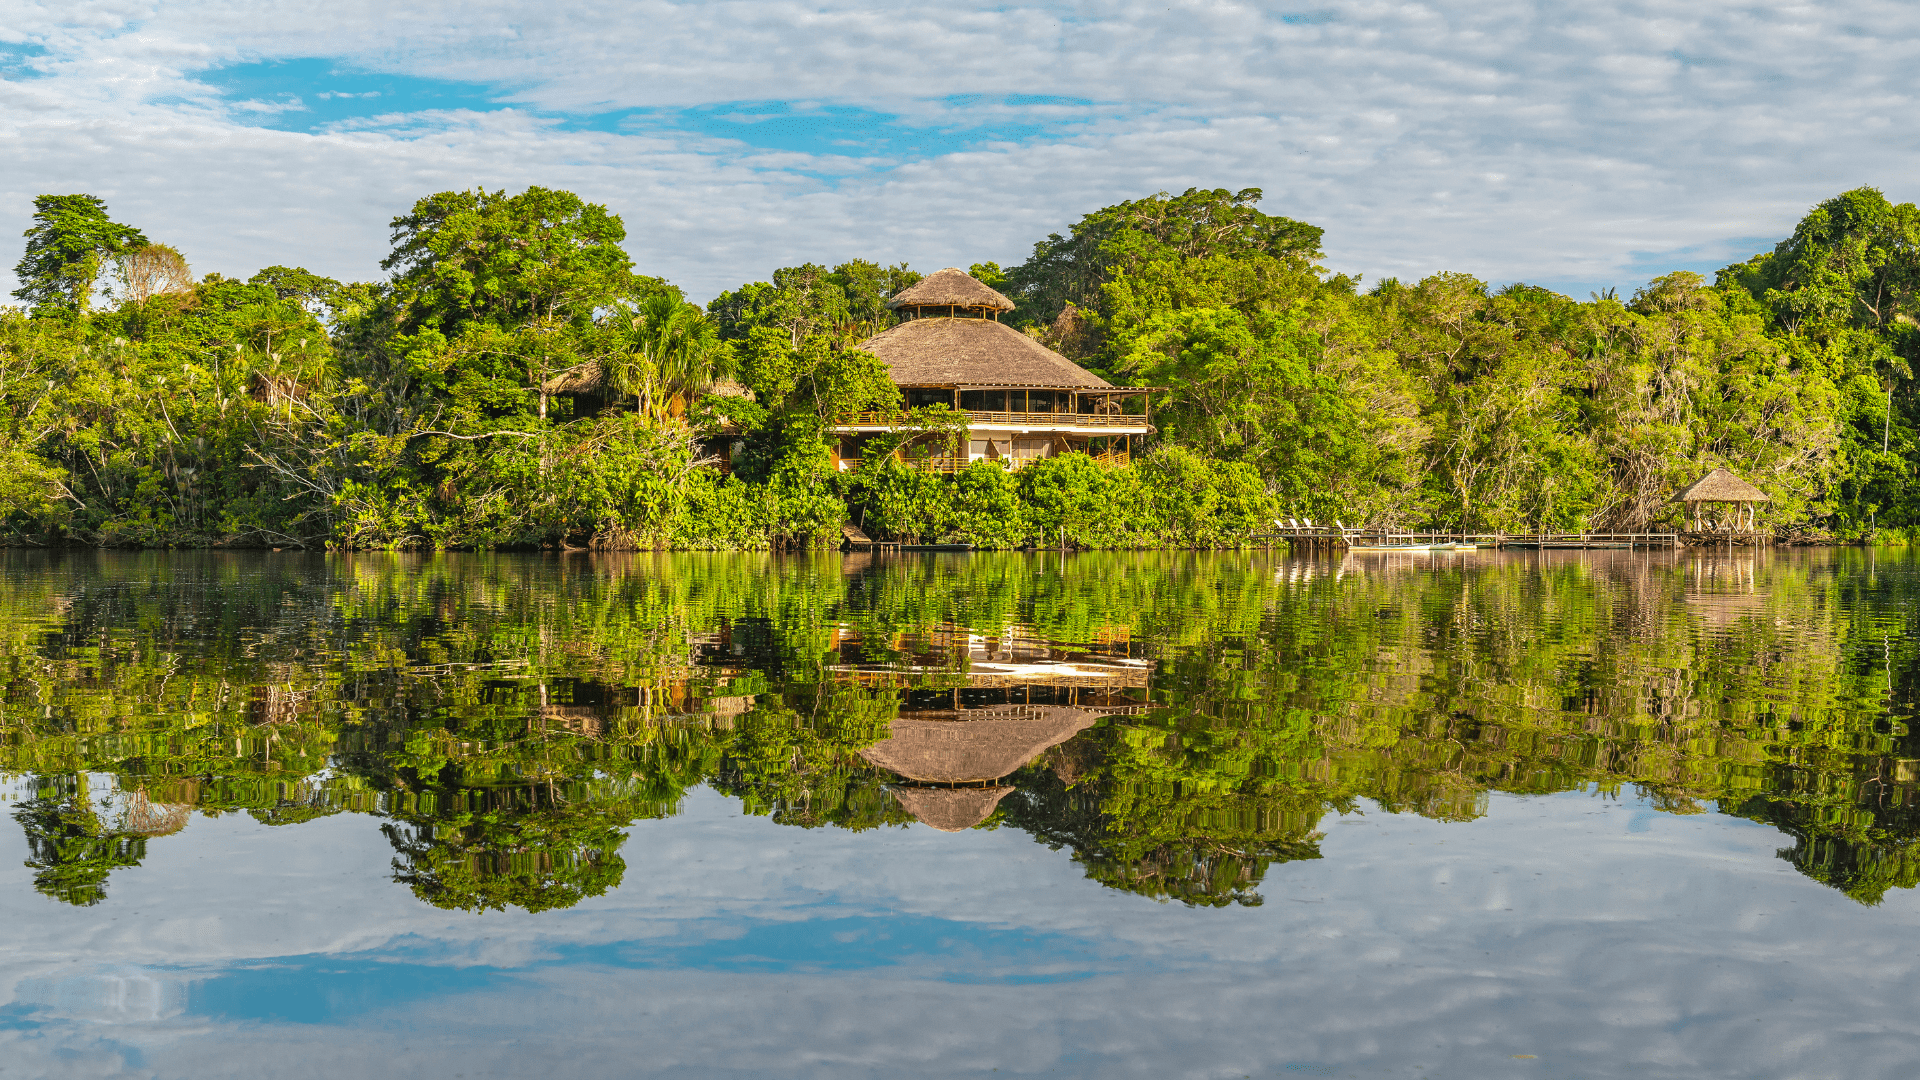 Inmersión en la Belleza: Eco Tour a la Amazonia, Brasil